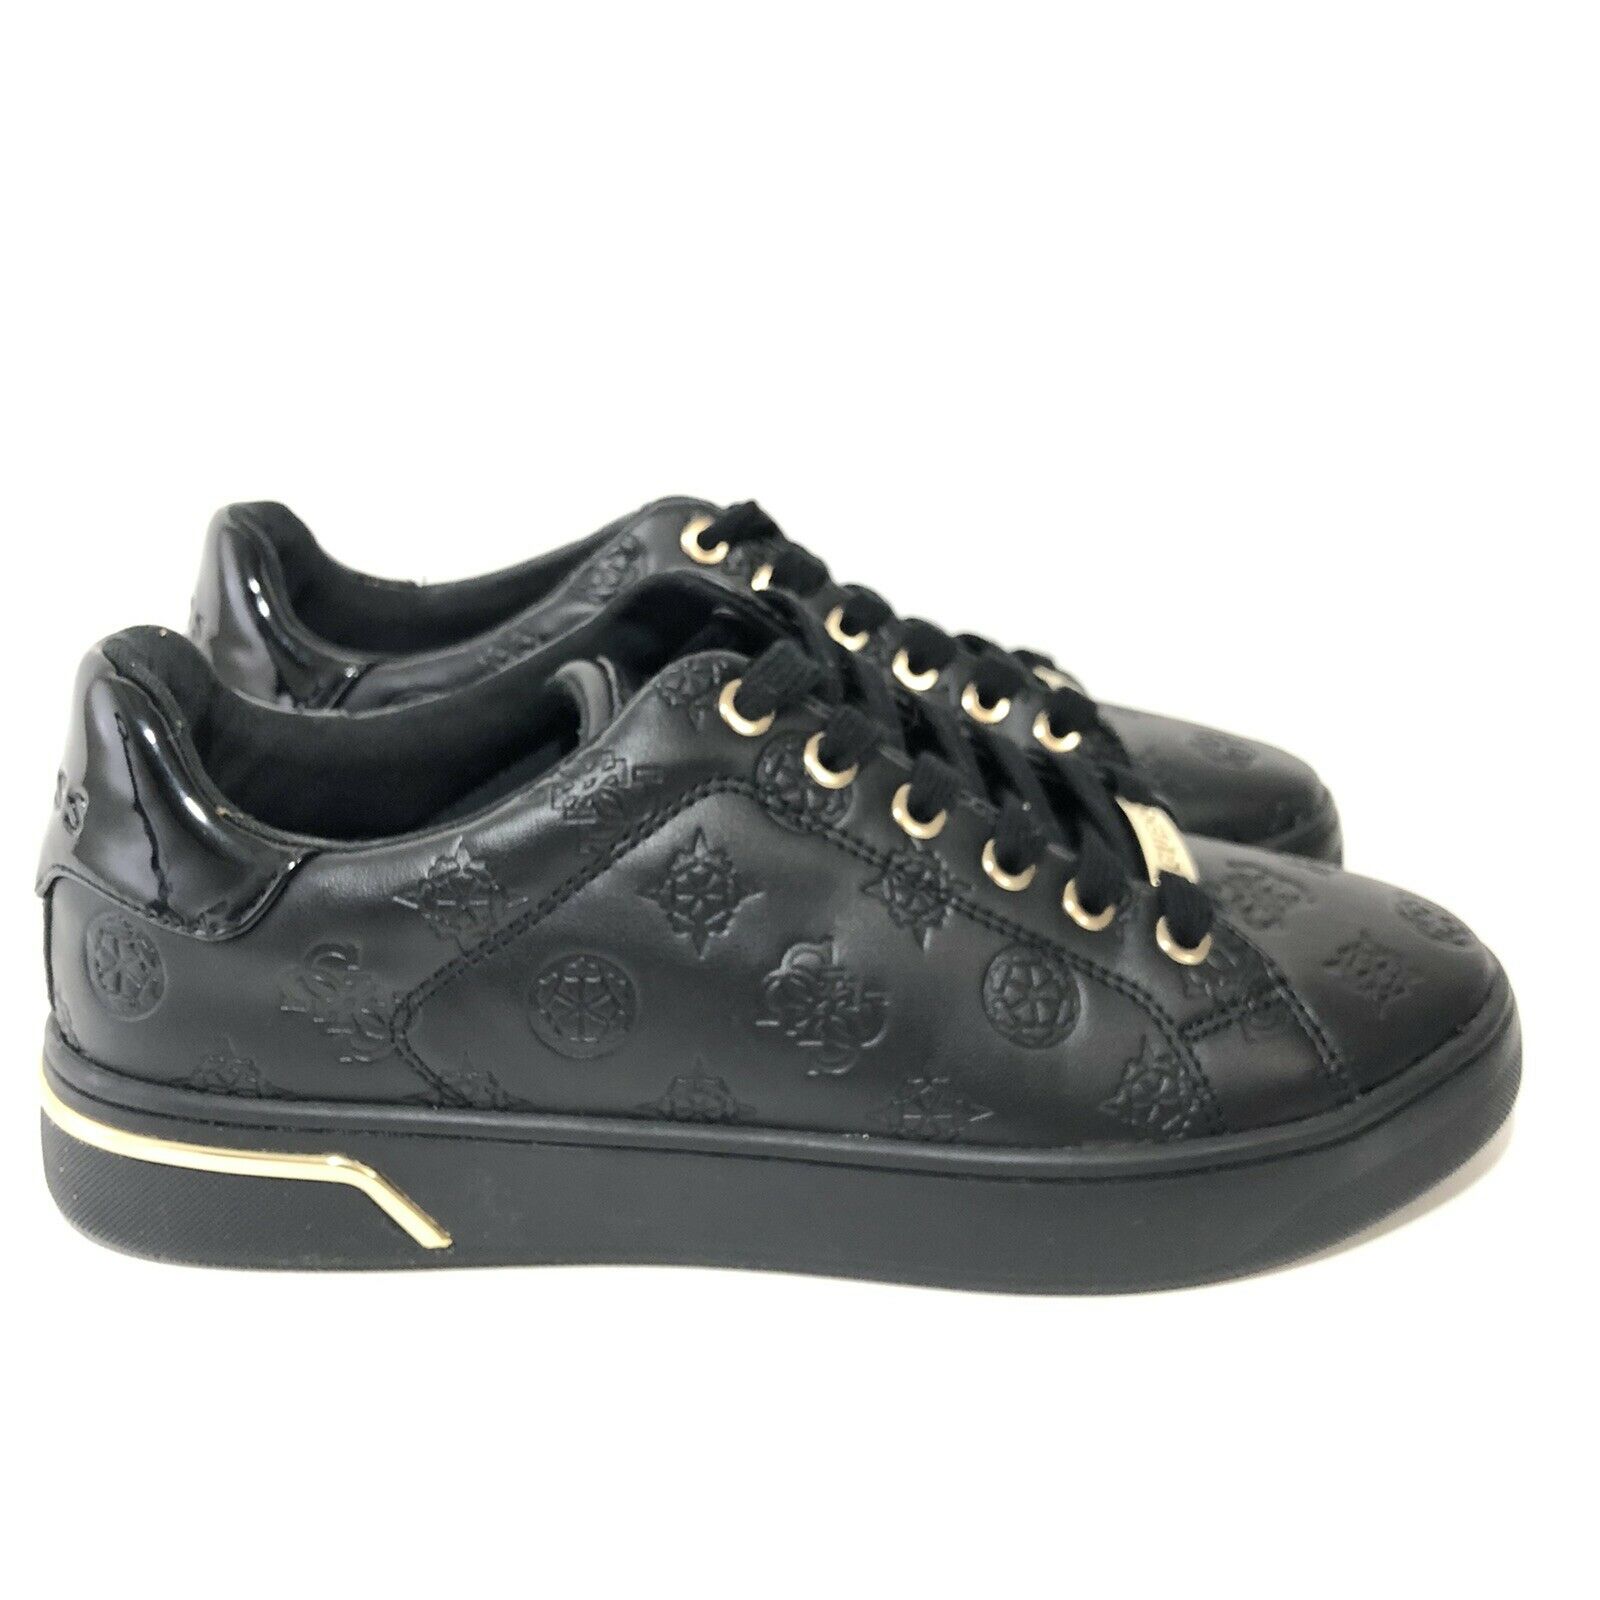 Guess Black Gwrollin Women's Sneakers Casual Shoes Size 8.5 M